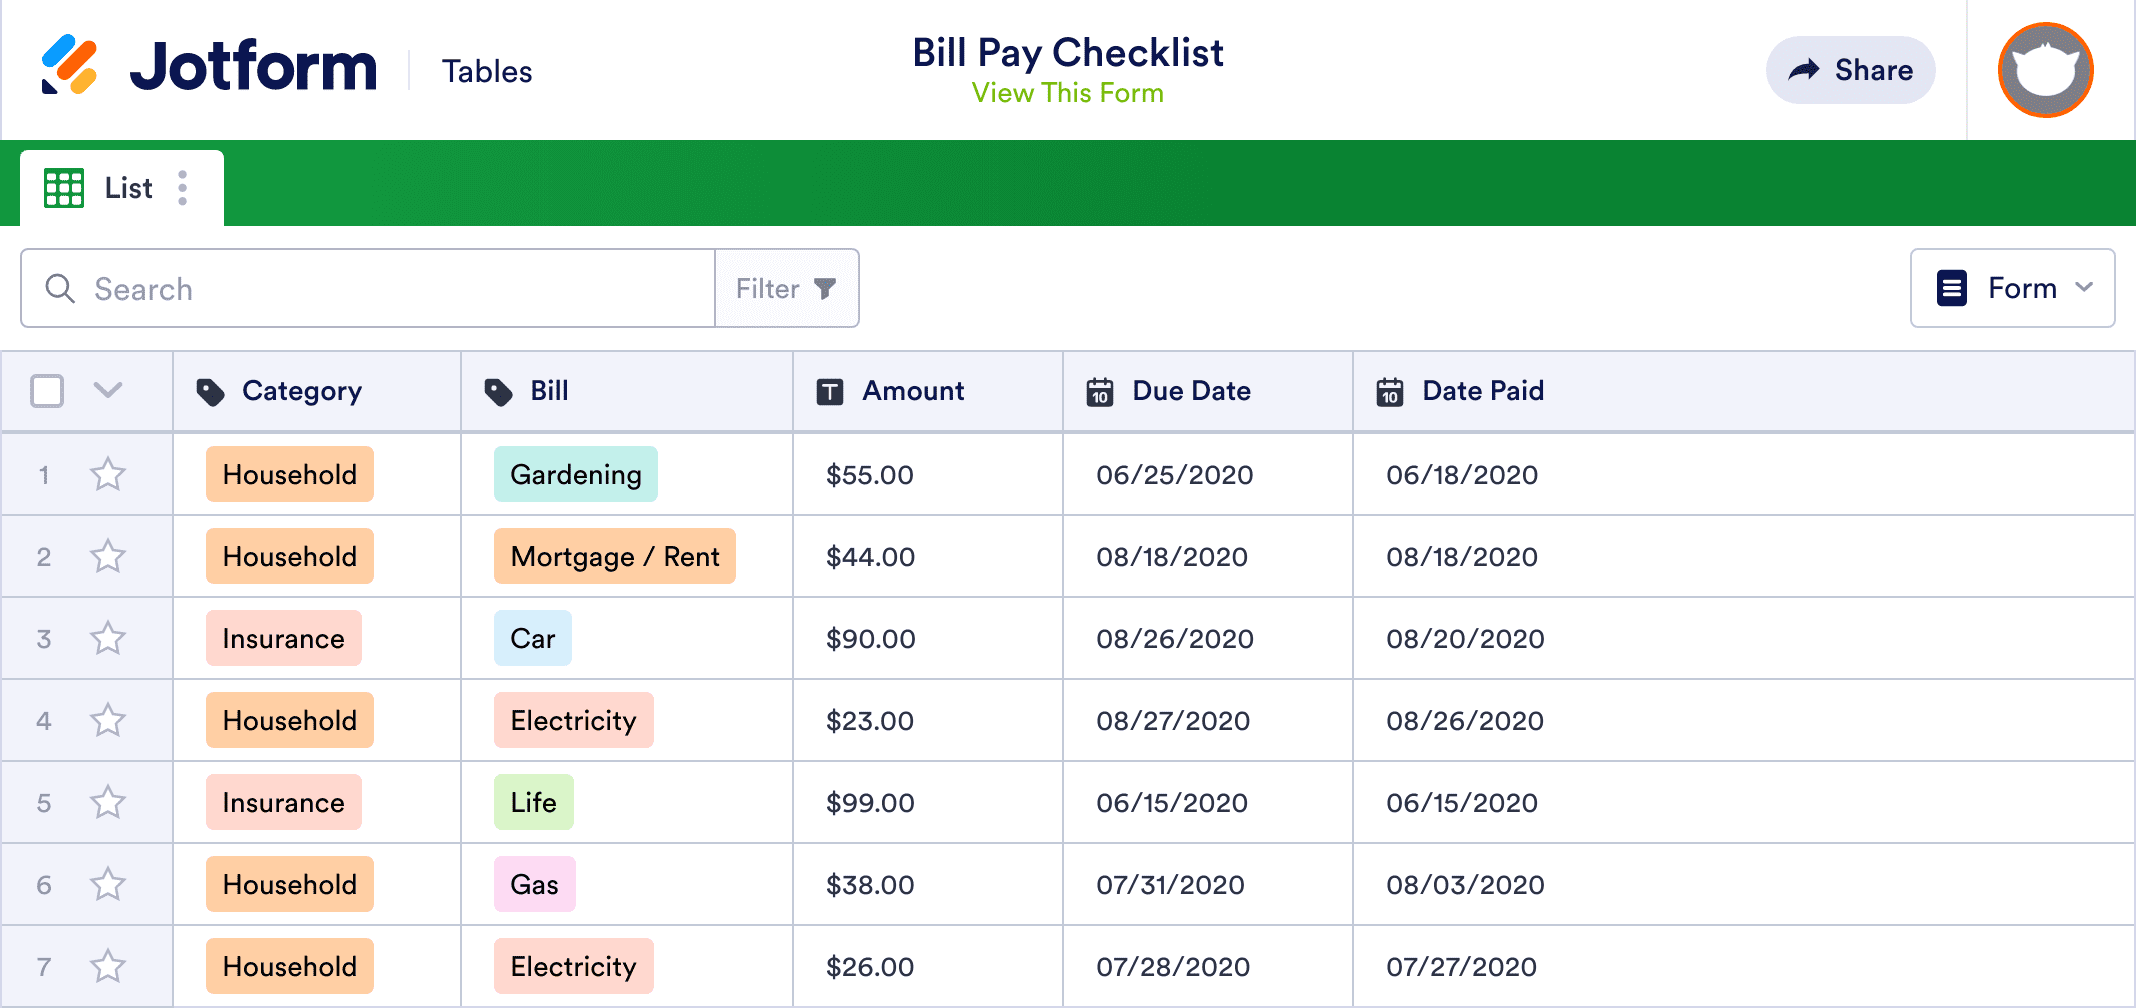 Bill Pay Checklist